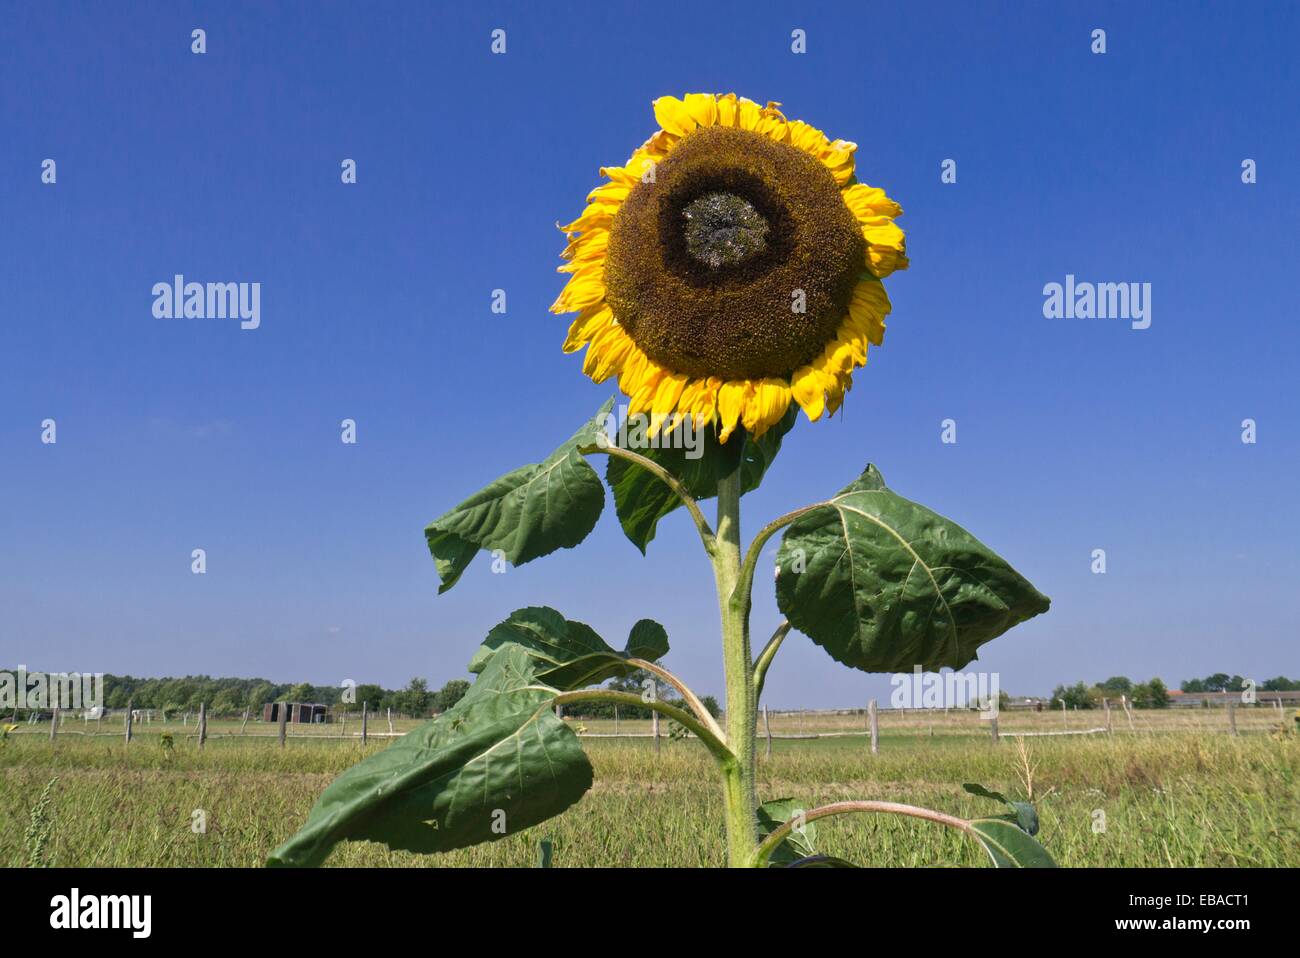 Common sunflower (Helianthus annuus) Stock Photo